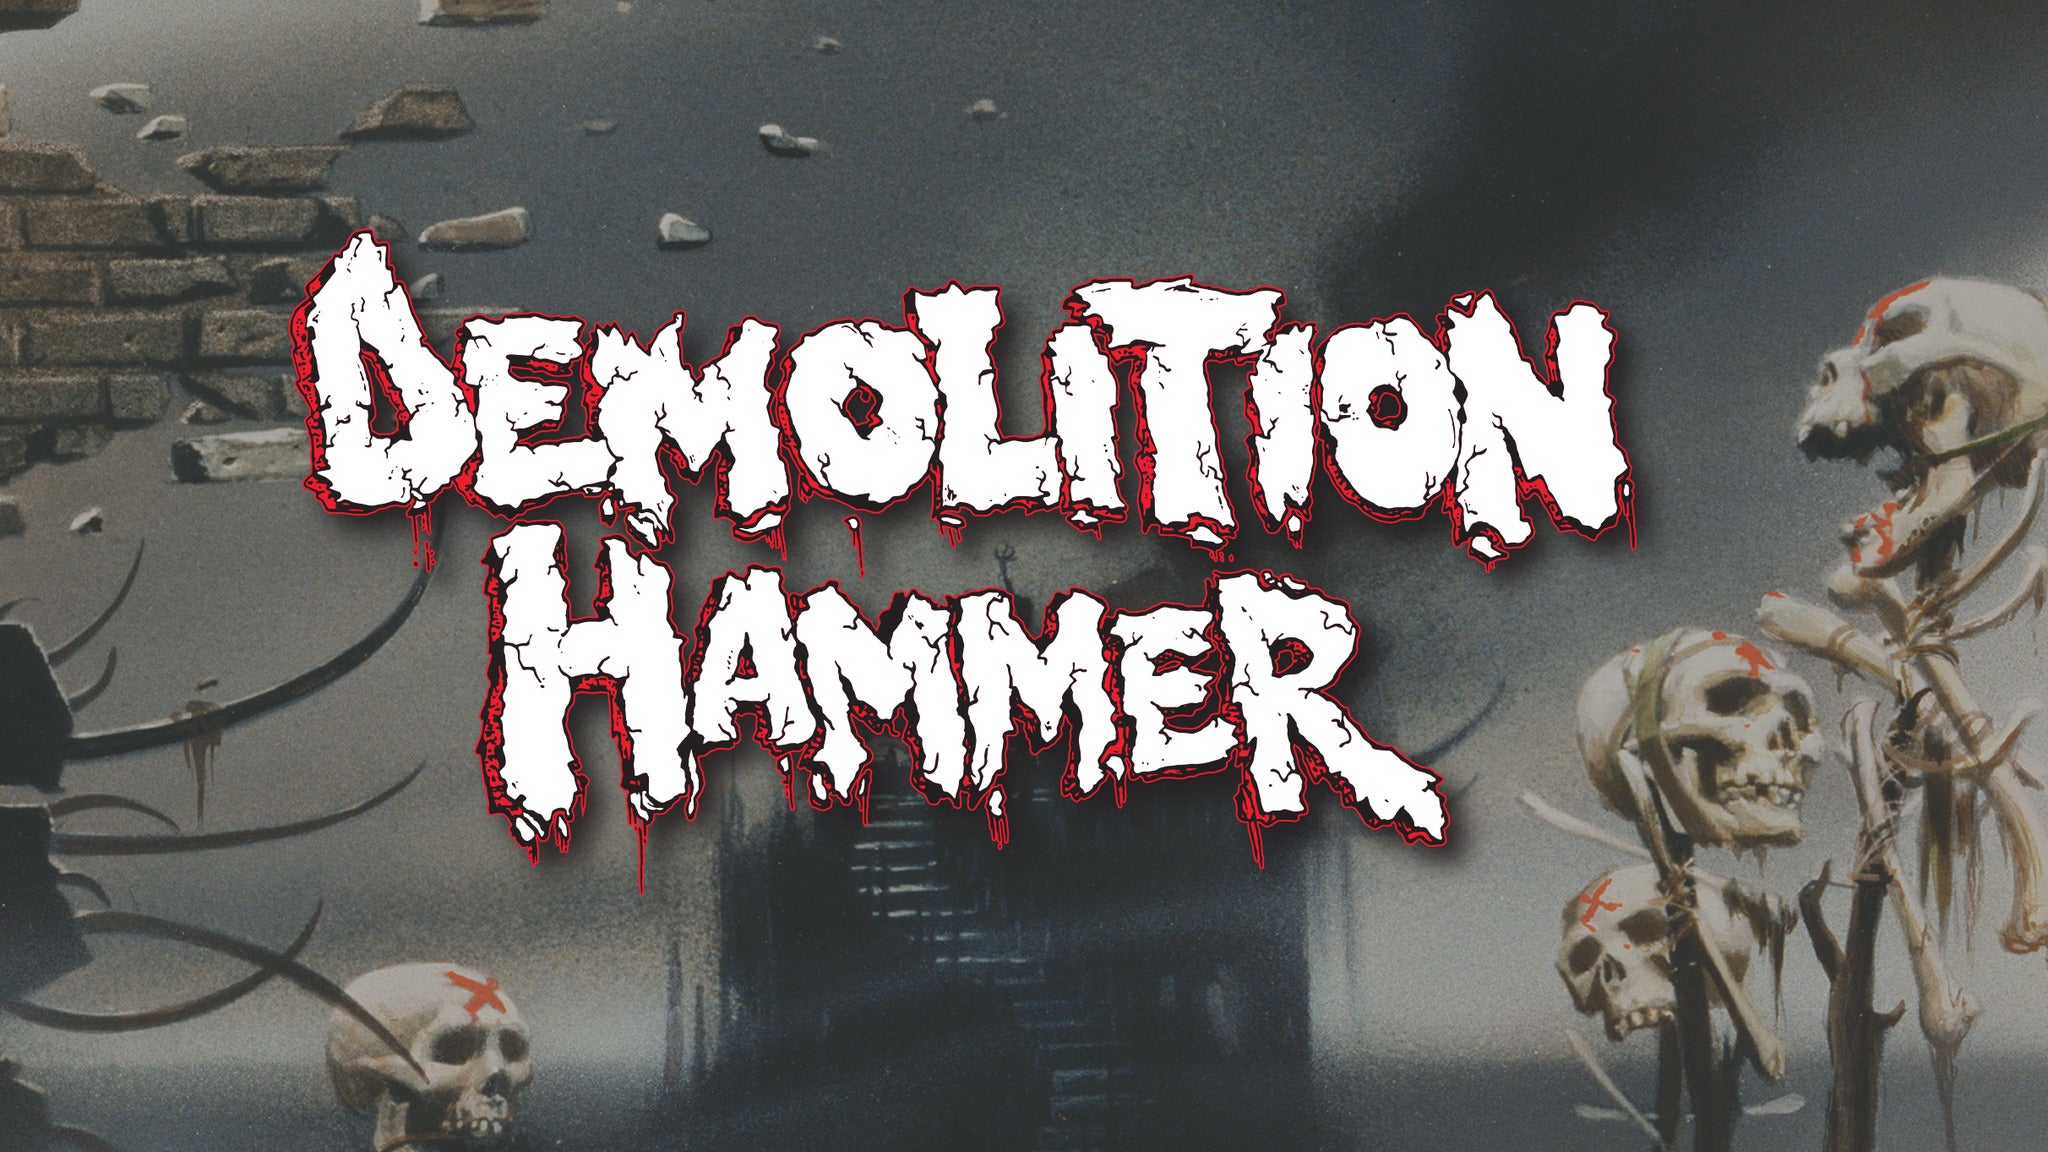 Demolition Hammer in New York promo photo for Music Geeks presale offer code